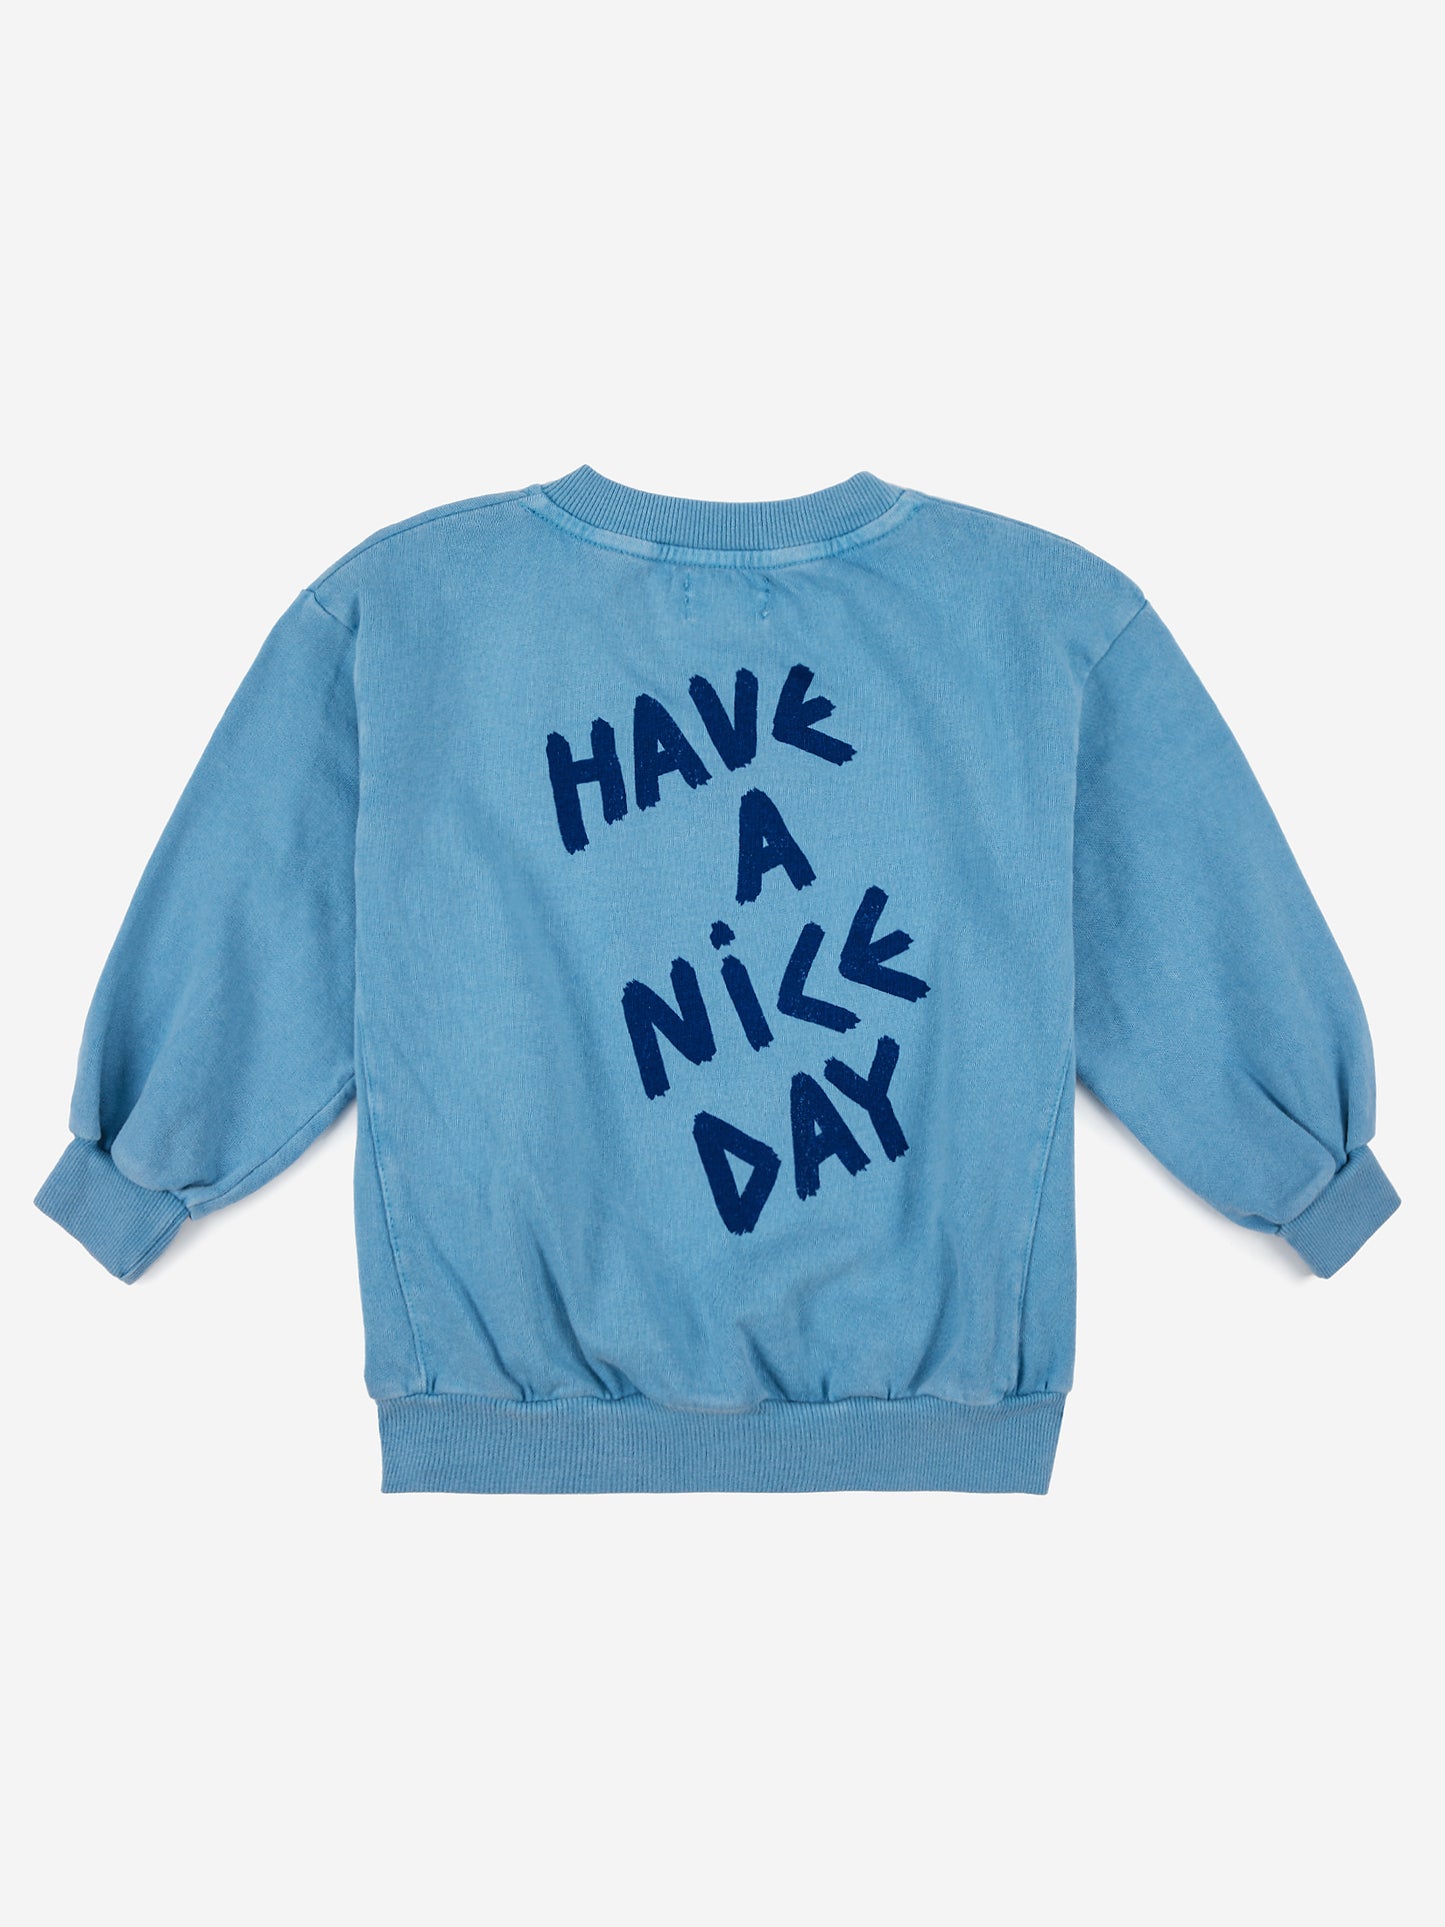 Have A Nice Day sweatshirt